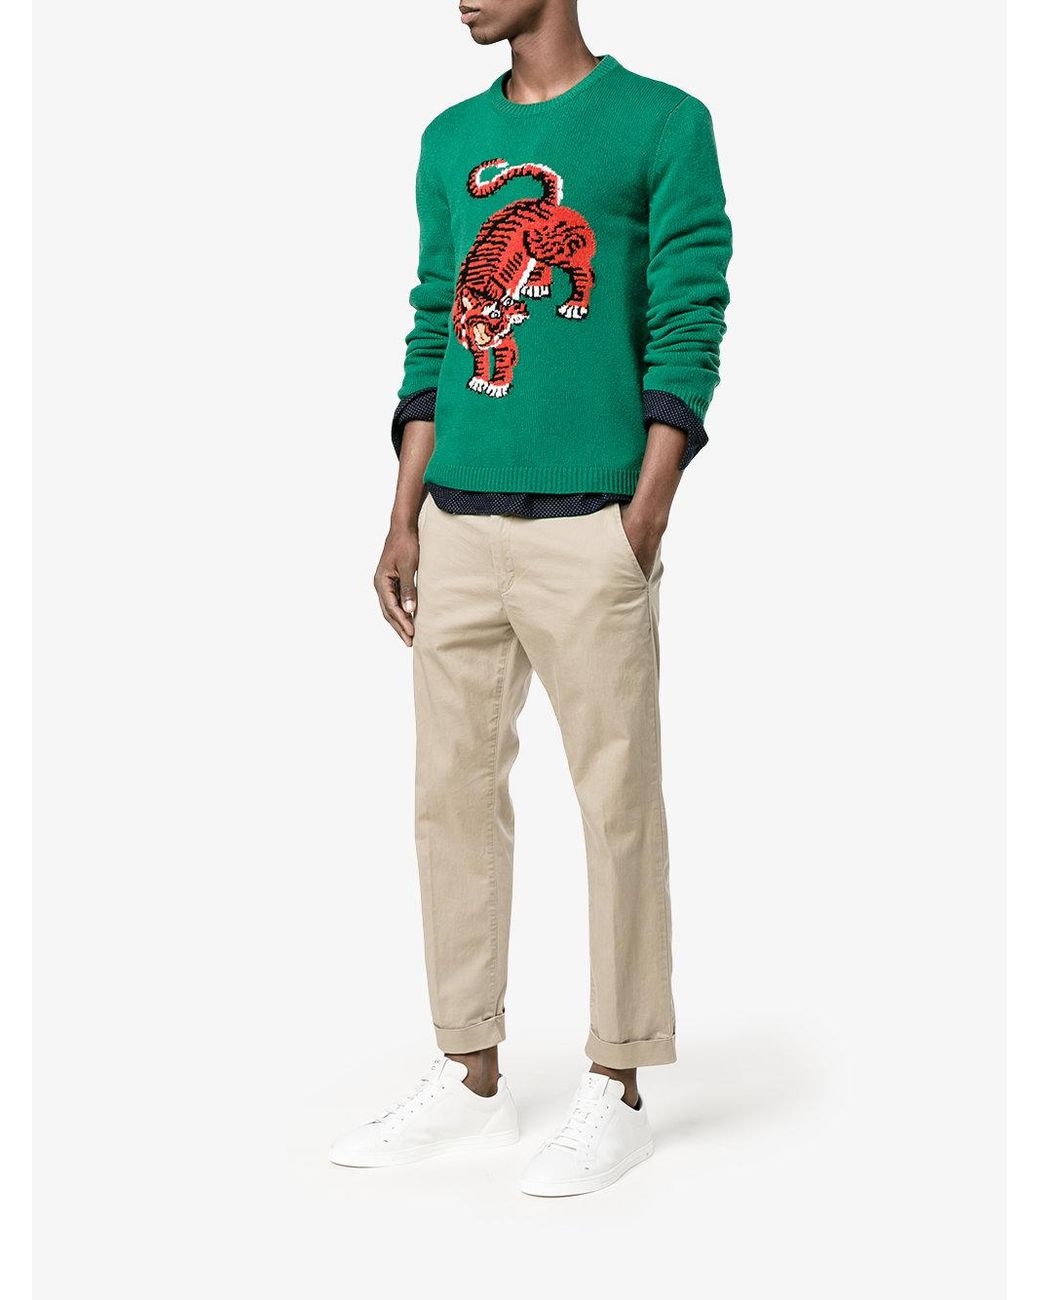 Gucci Intarsia Tiger Jumper in Green for Men | Lyst Australia